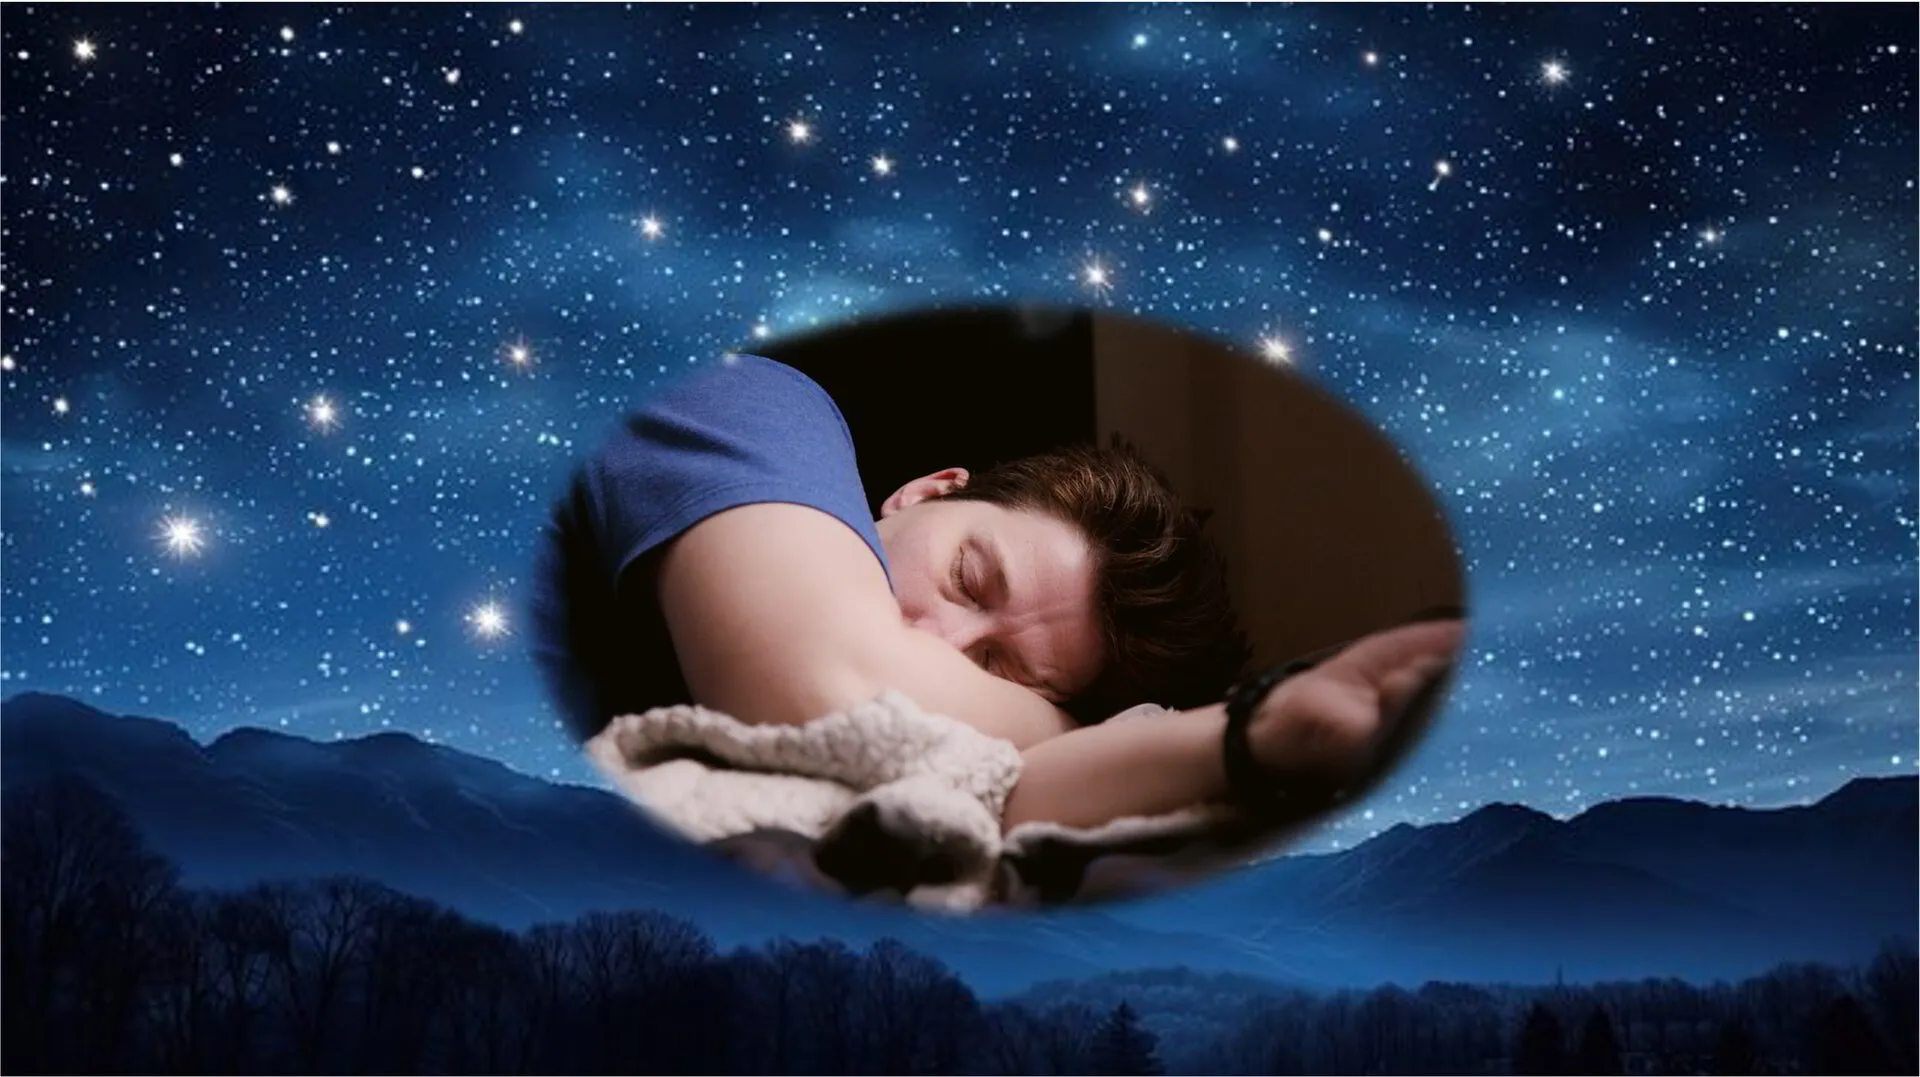 Psychic Meditation For Sleep: To Sleep with the Earth